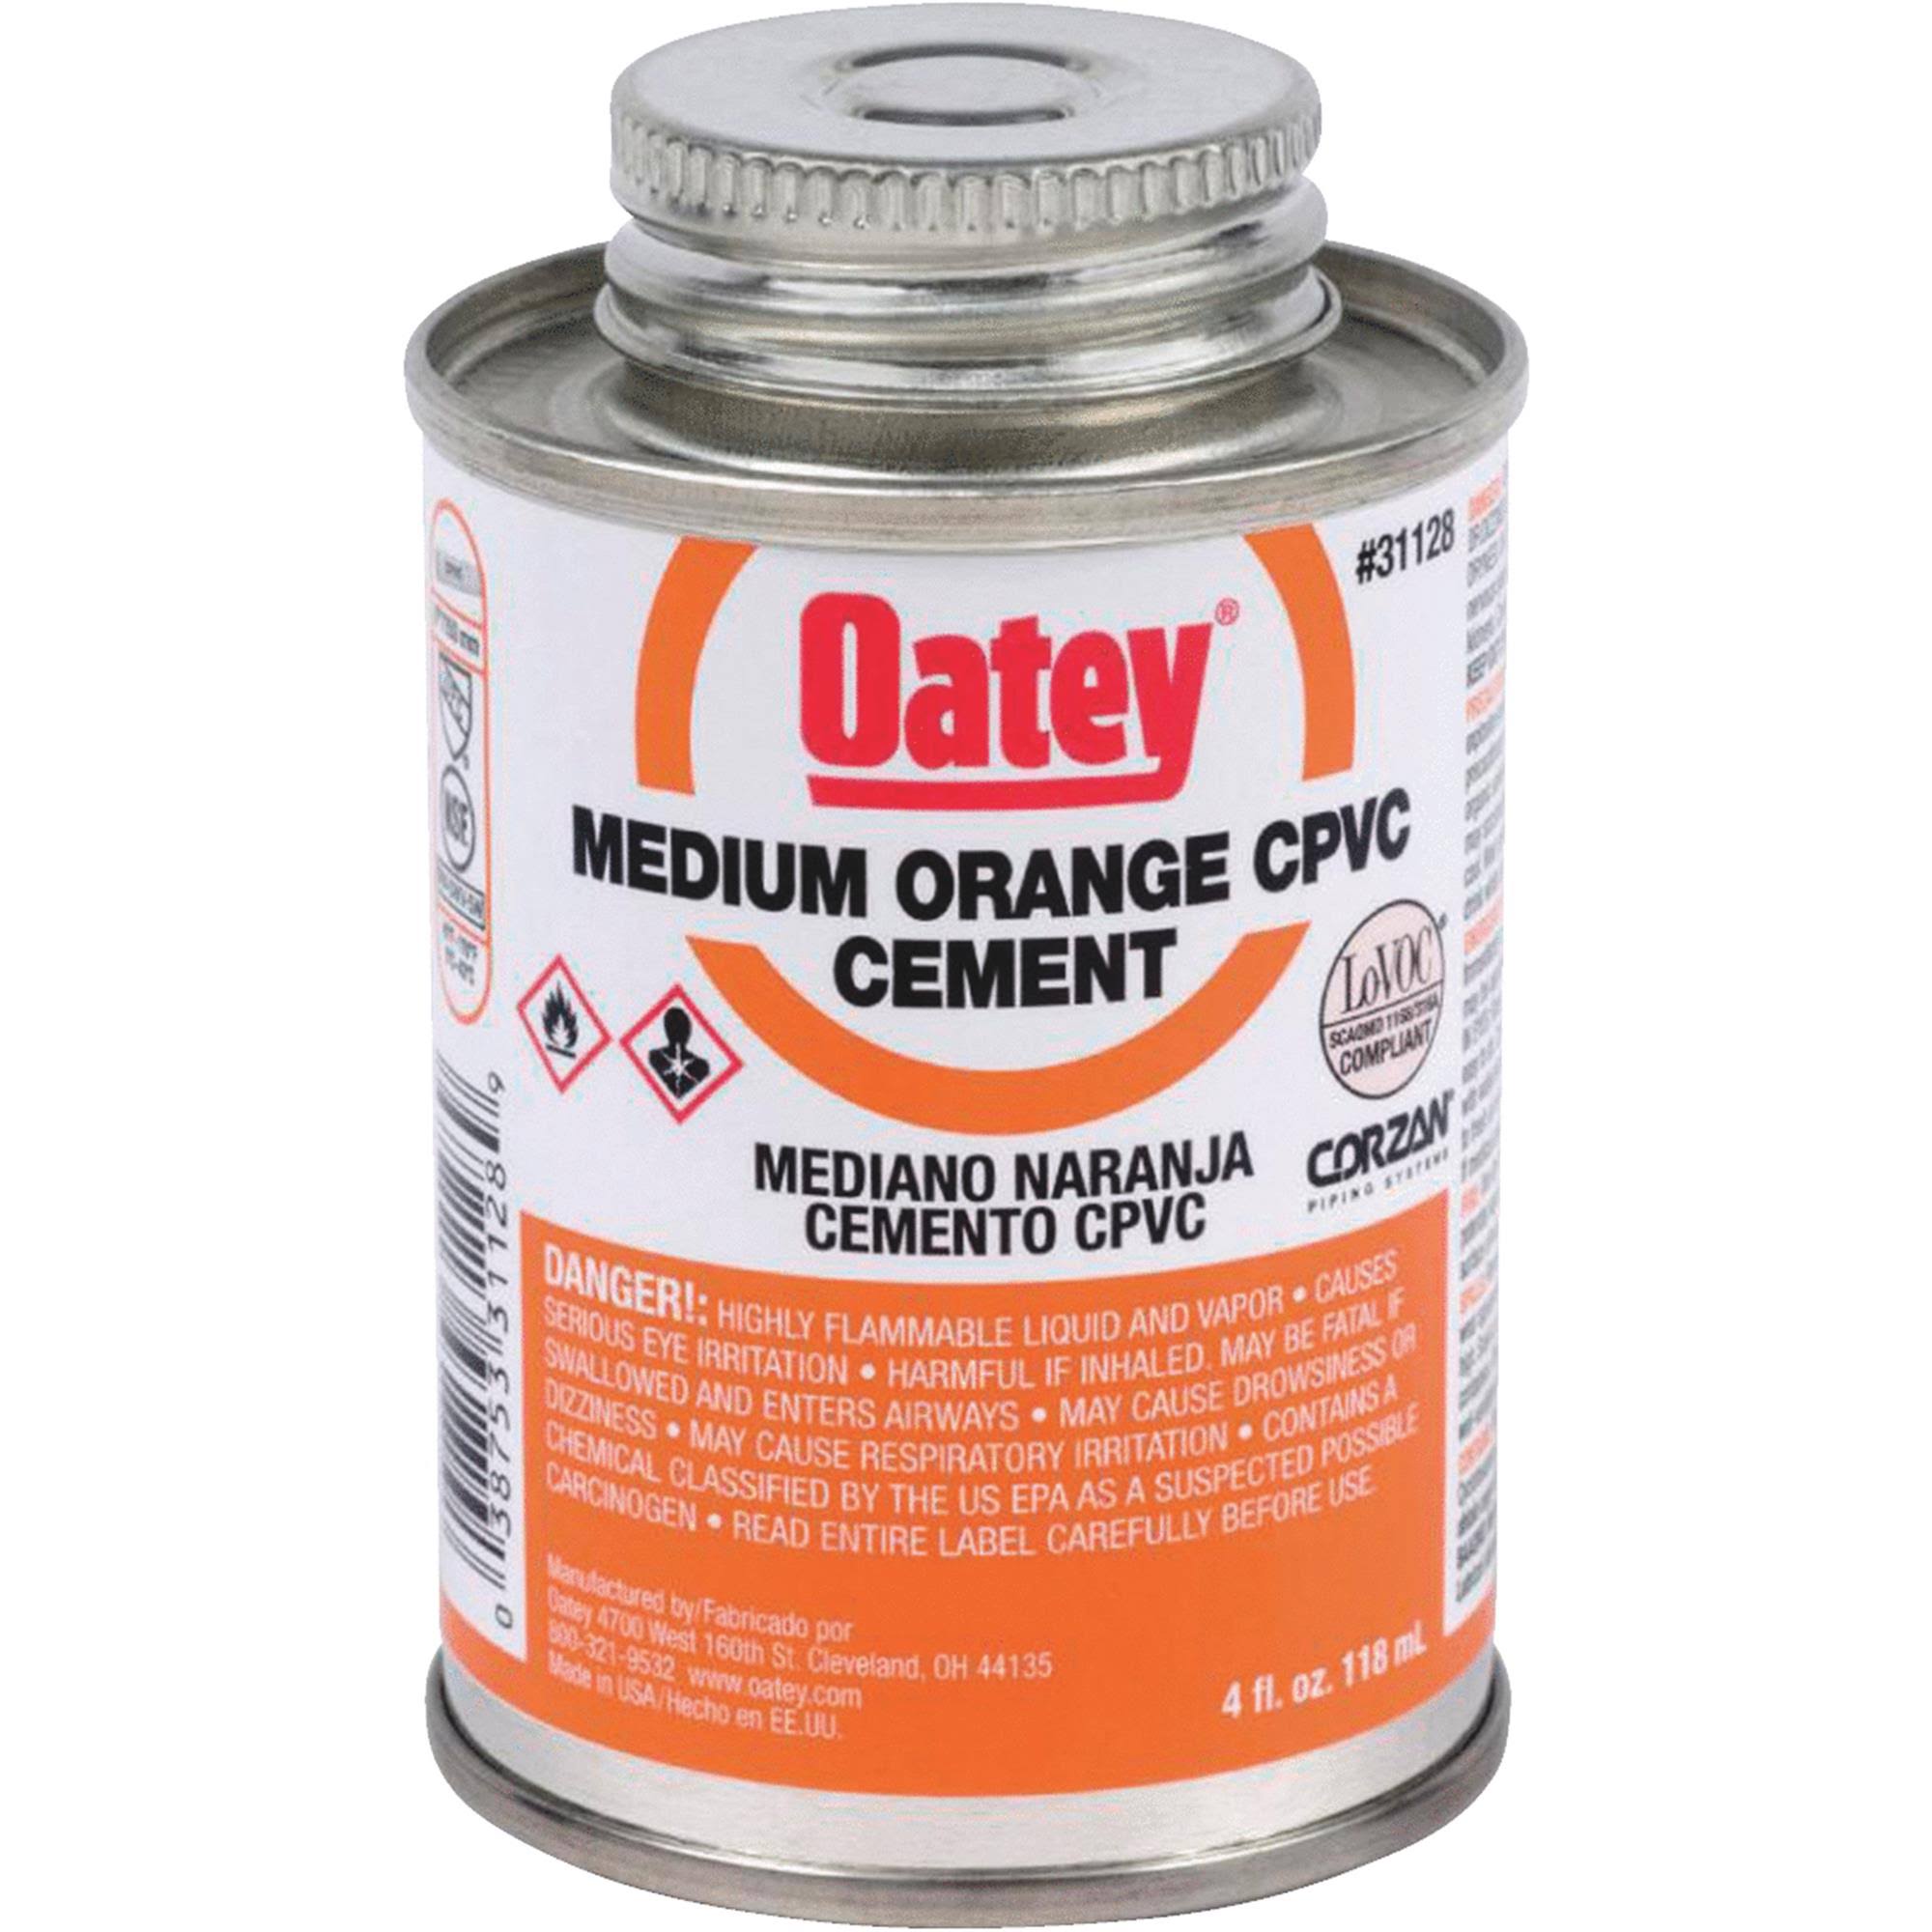 Oatey CPVC Cement - Medium Orange, 118ml